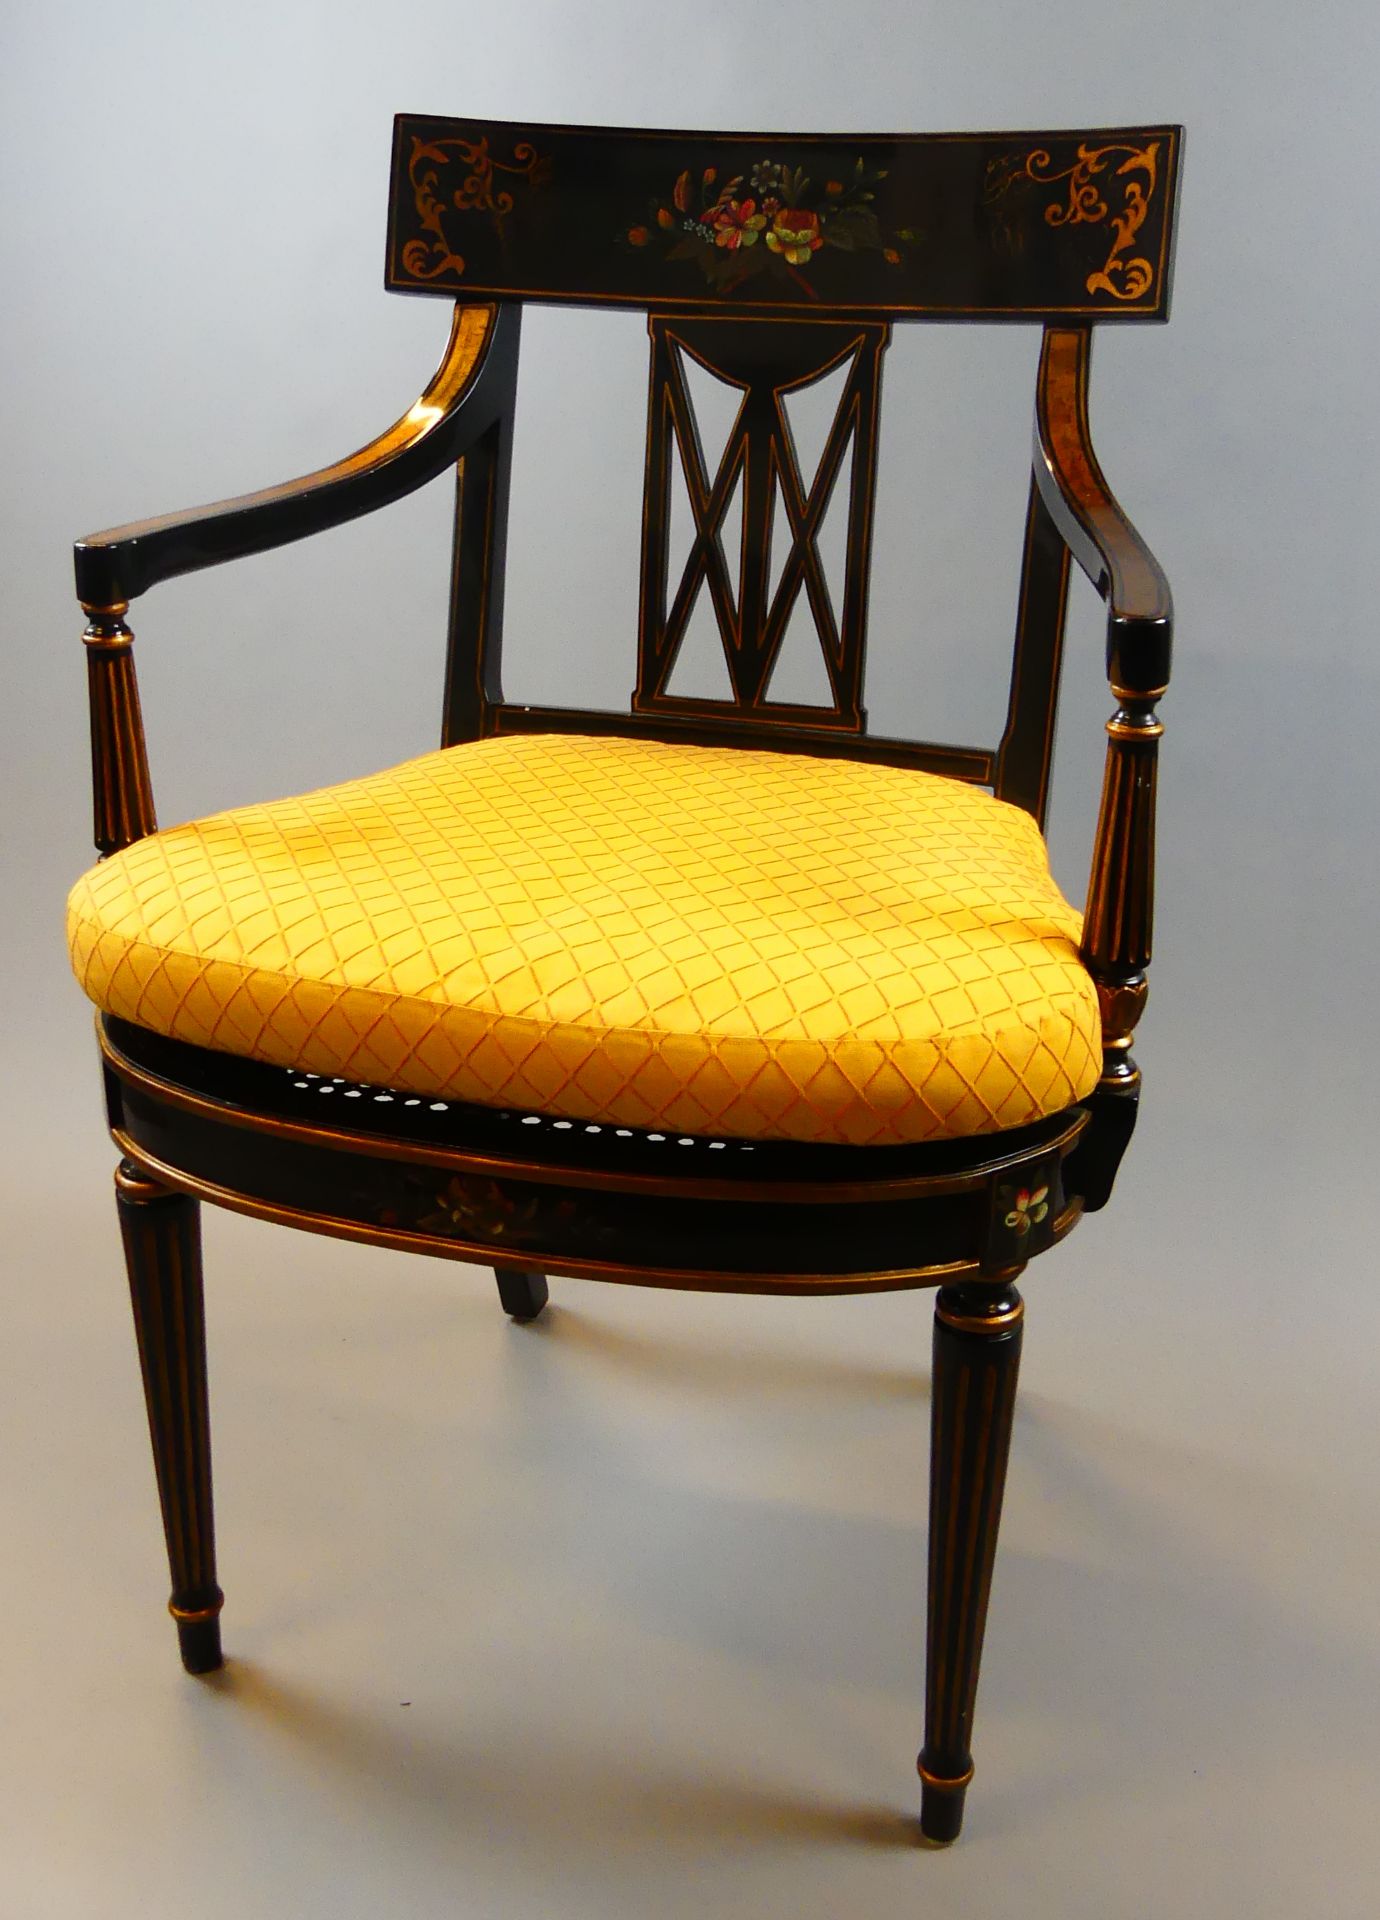 Armlehnstuhl, Blumenbemalung, lackiert, Peddigrohrsitz, Rückenhöhe ca. 89 cm - Image 3 of 5